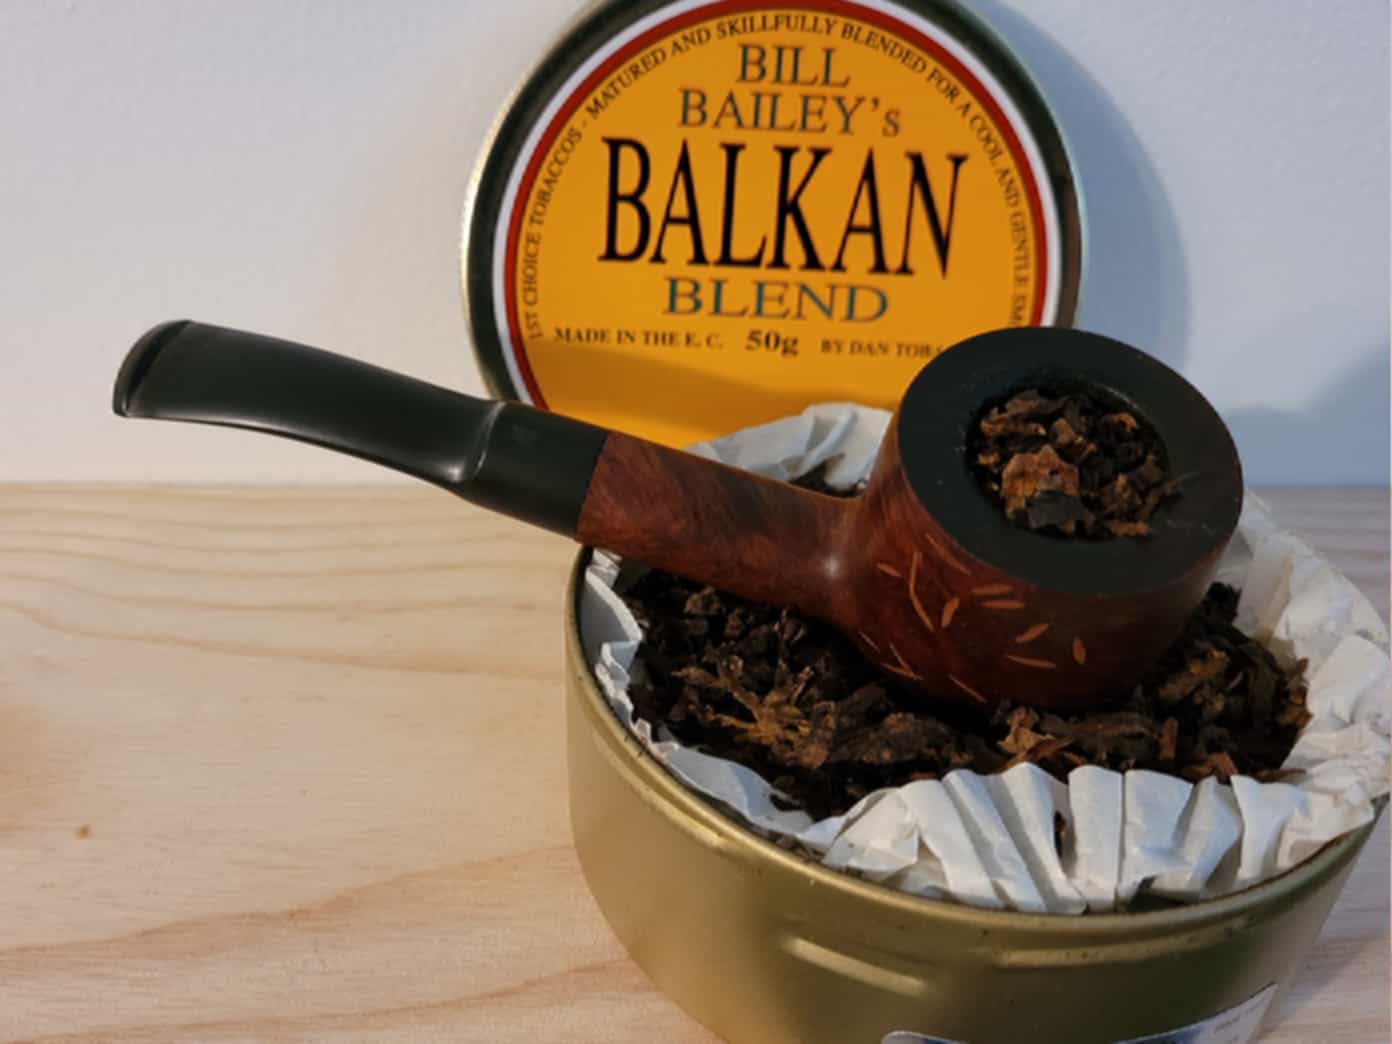 Balkan tobacco blend in a smoking pipe